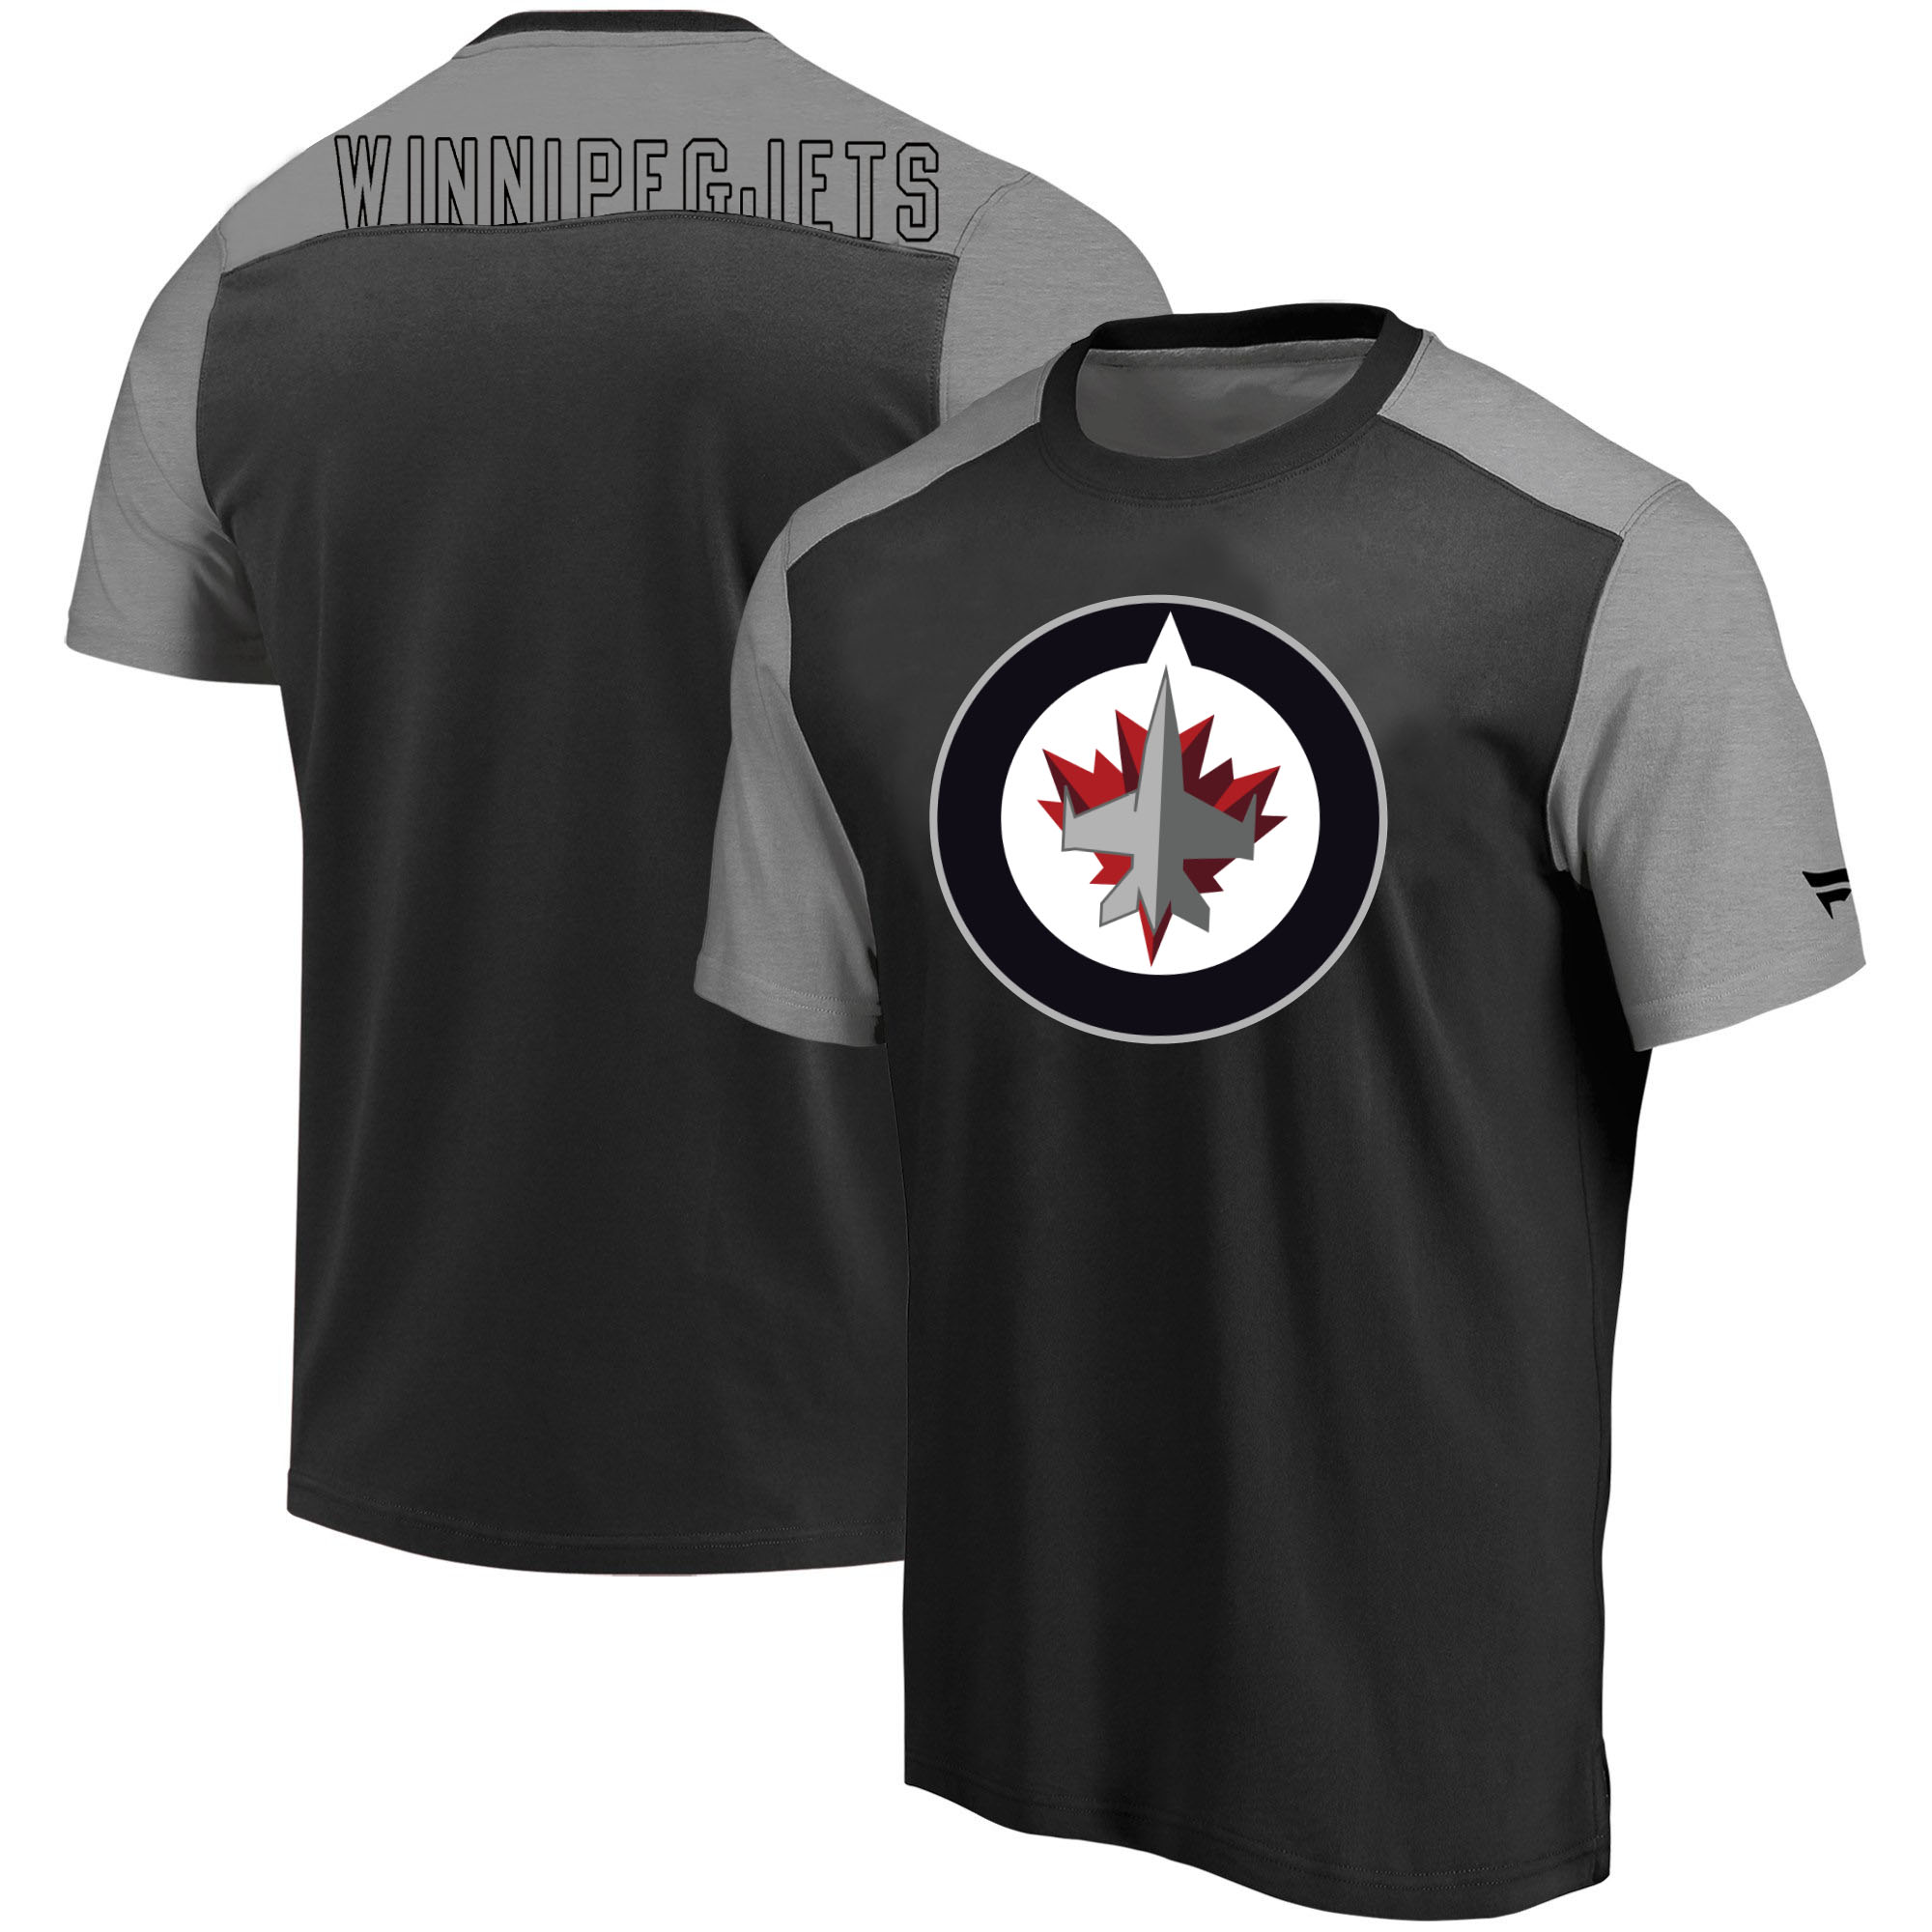 Winnipeg Jets Fanatics Branded Iconic Blocked T-Shirt Black Heathered Gray